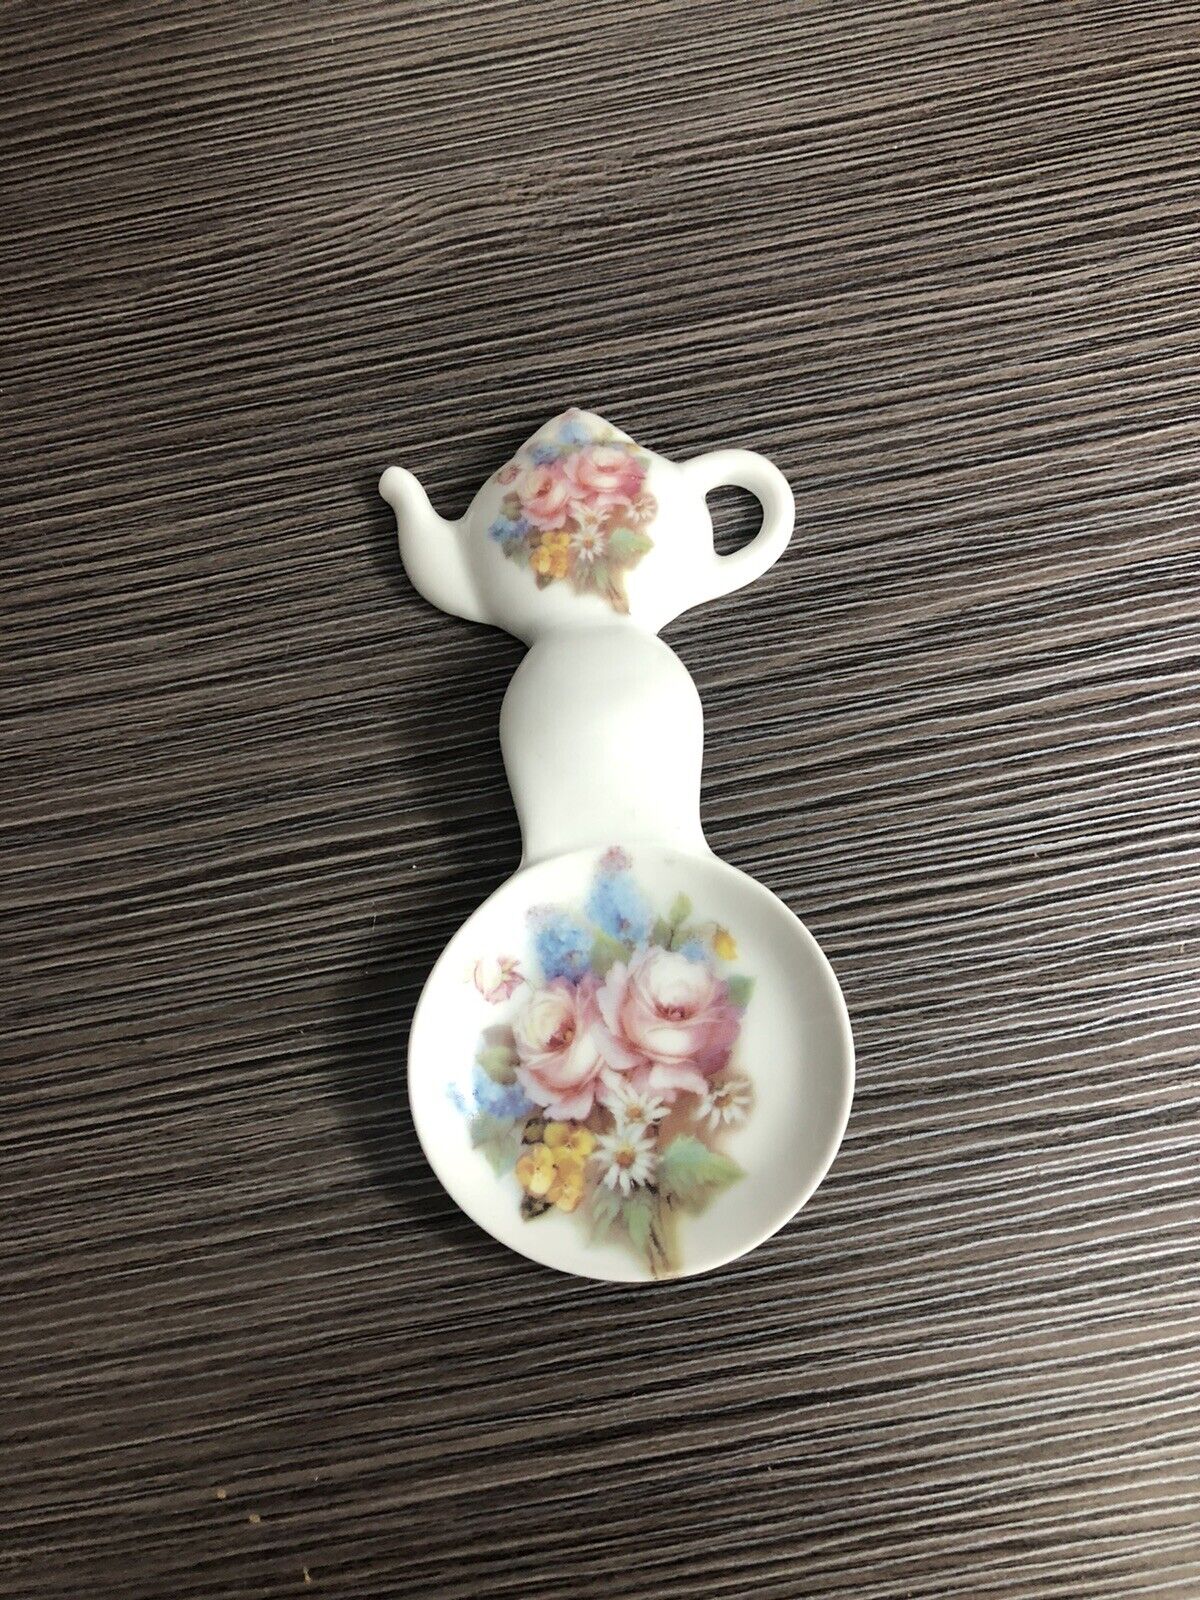 Flowers Pink Roses New Handmade Ceramic Porcelain Tea Bag / Spoon Rest